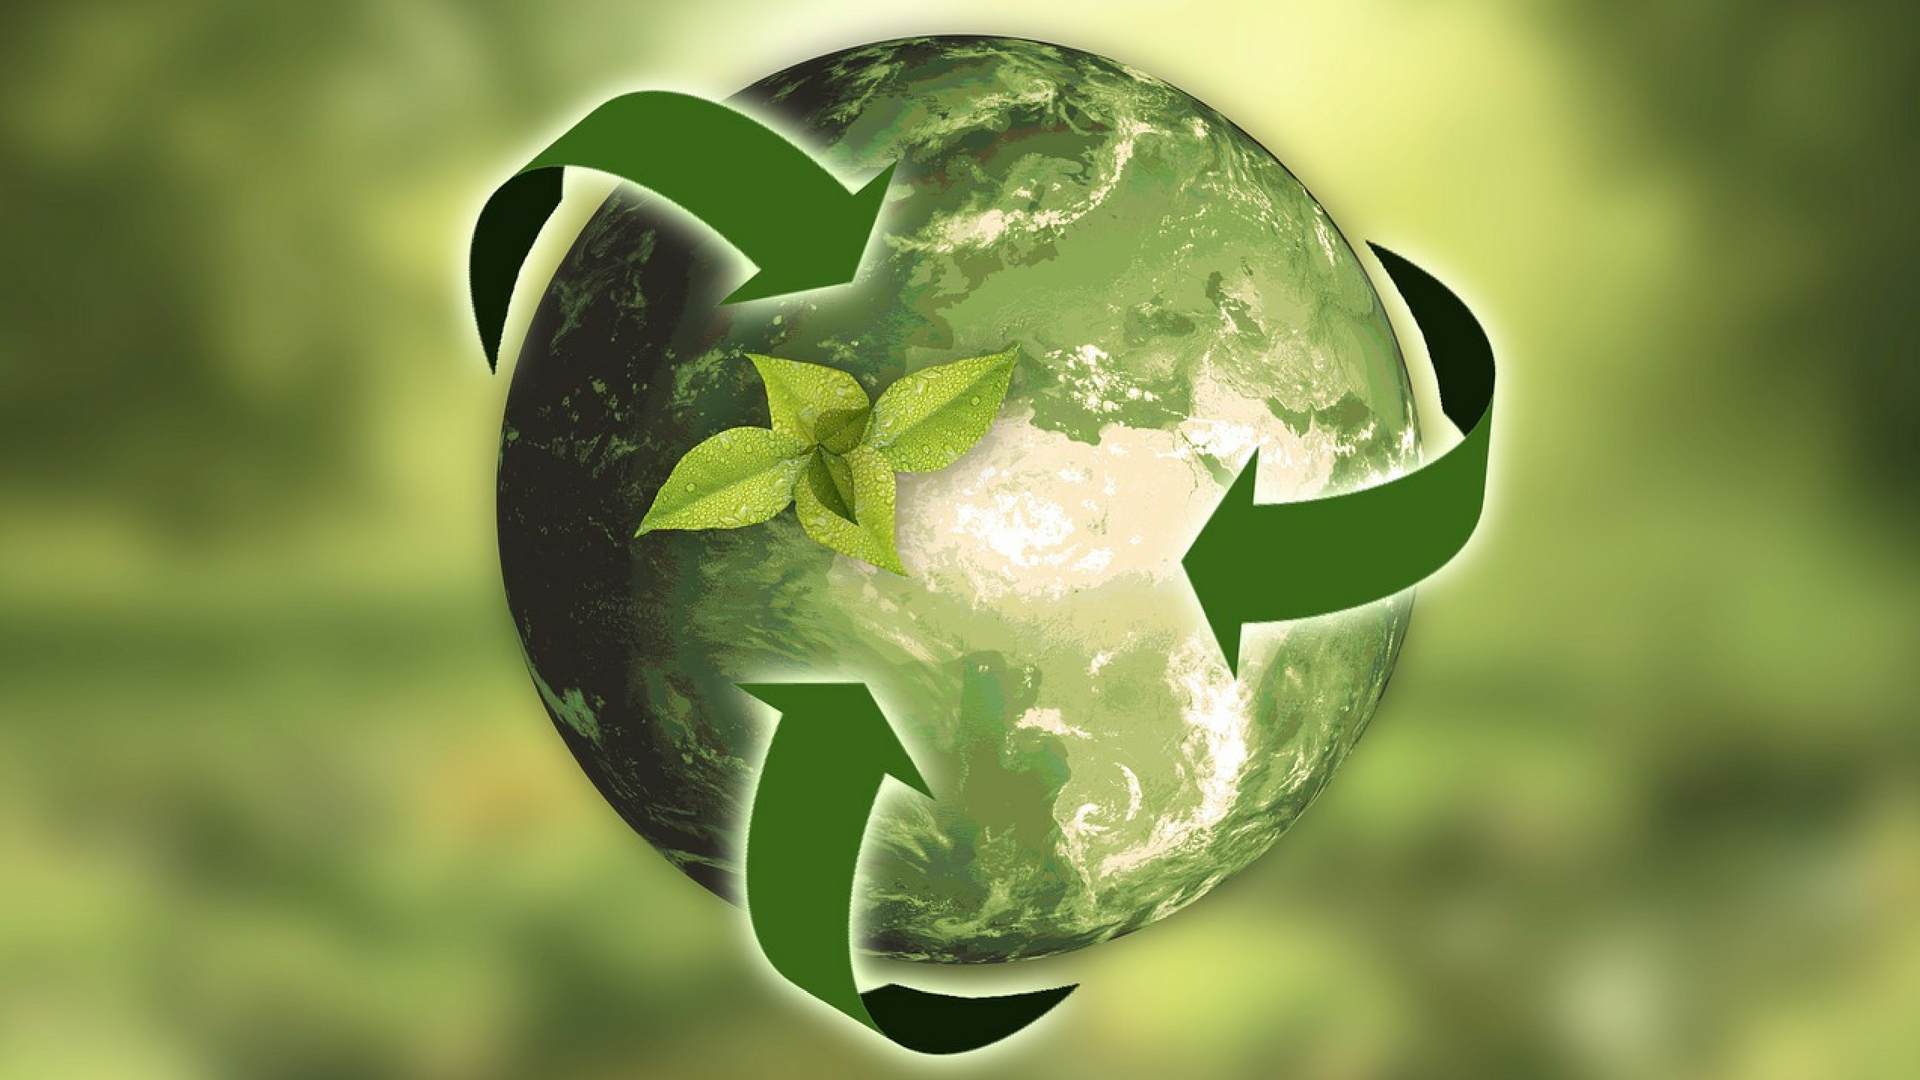 dia_mundial_reciclaje